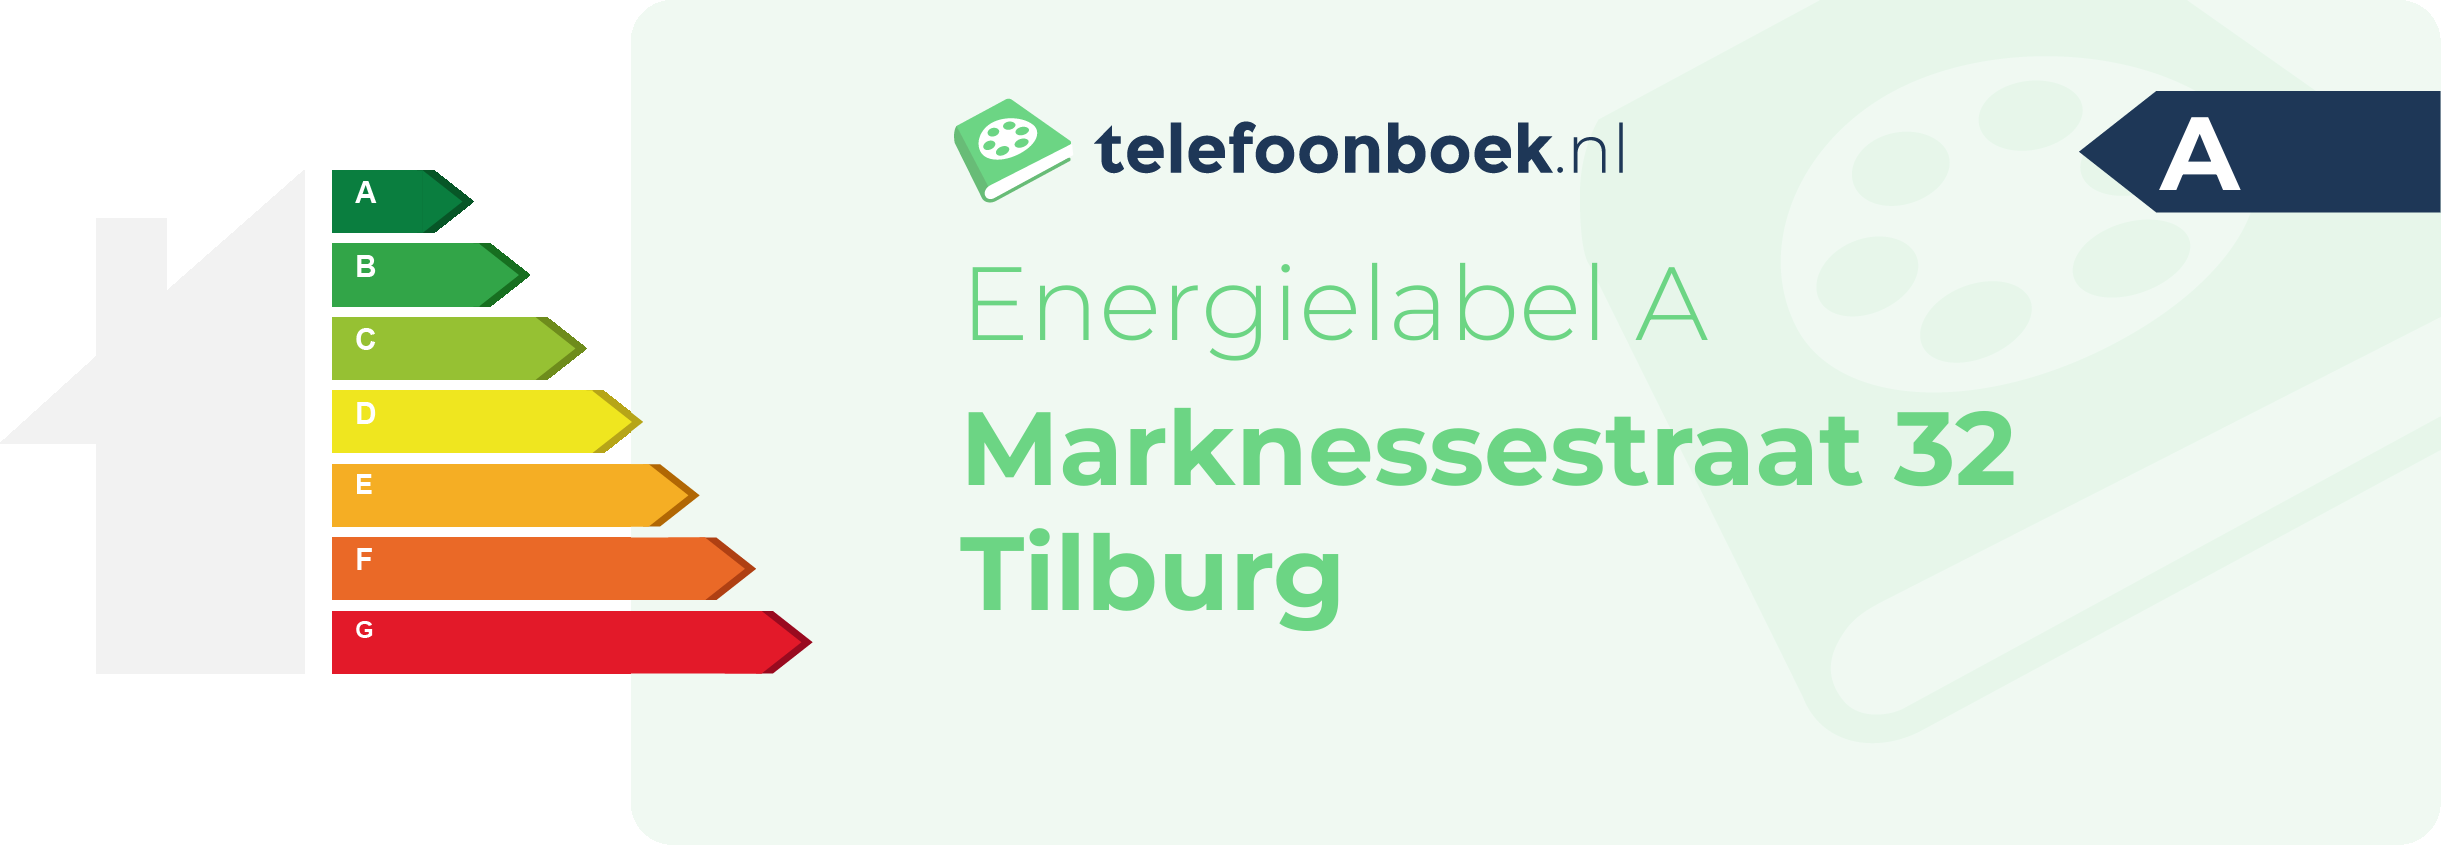 Energielabel Marknessestraat 32 Tilburg